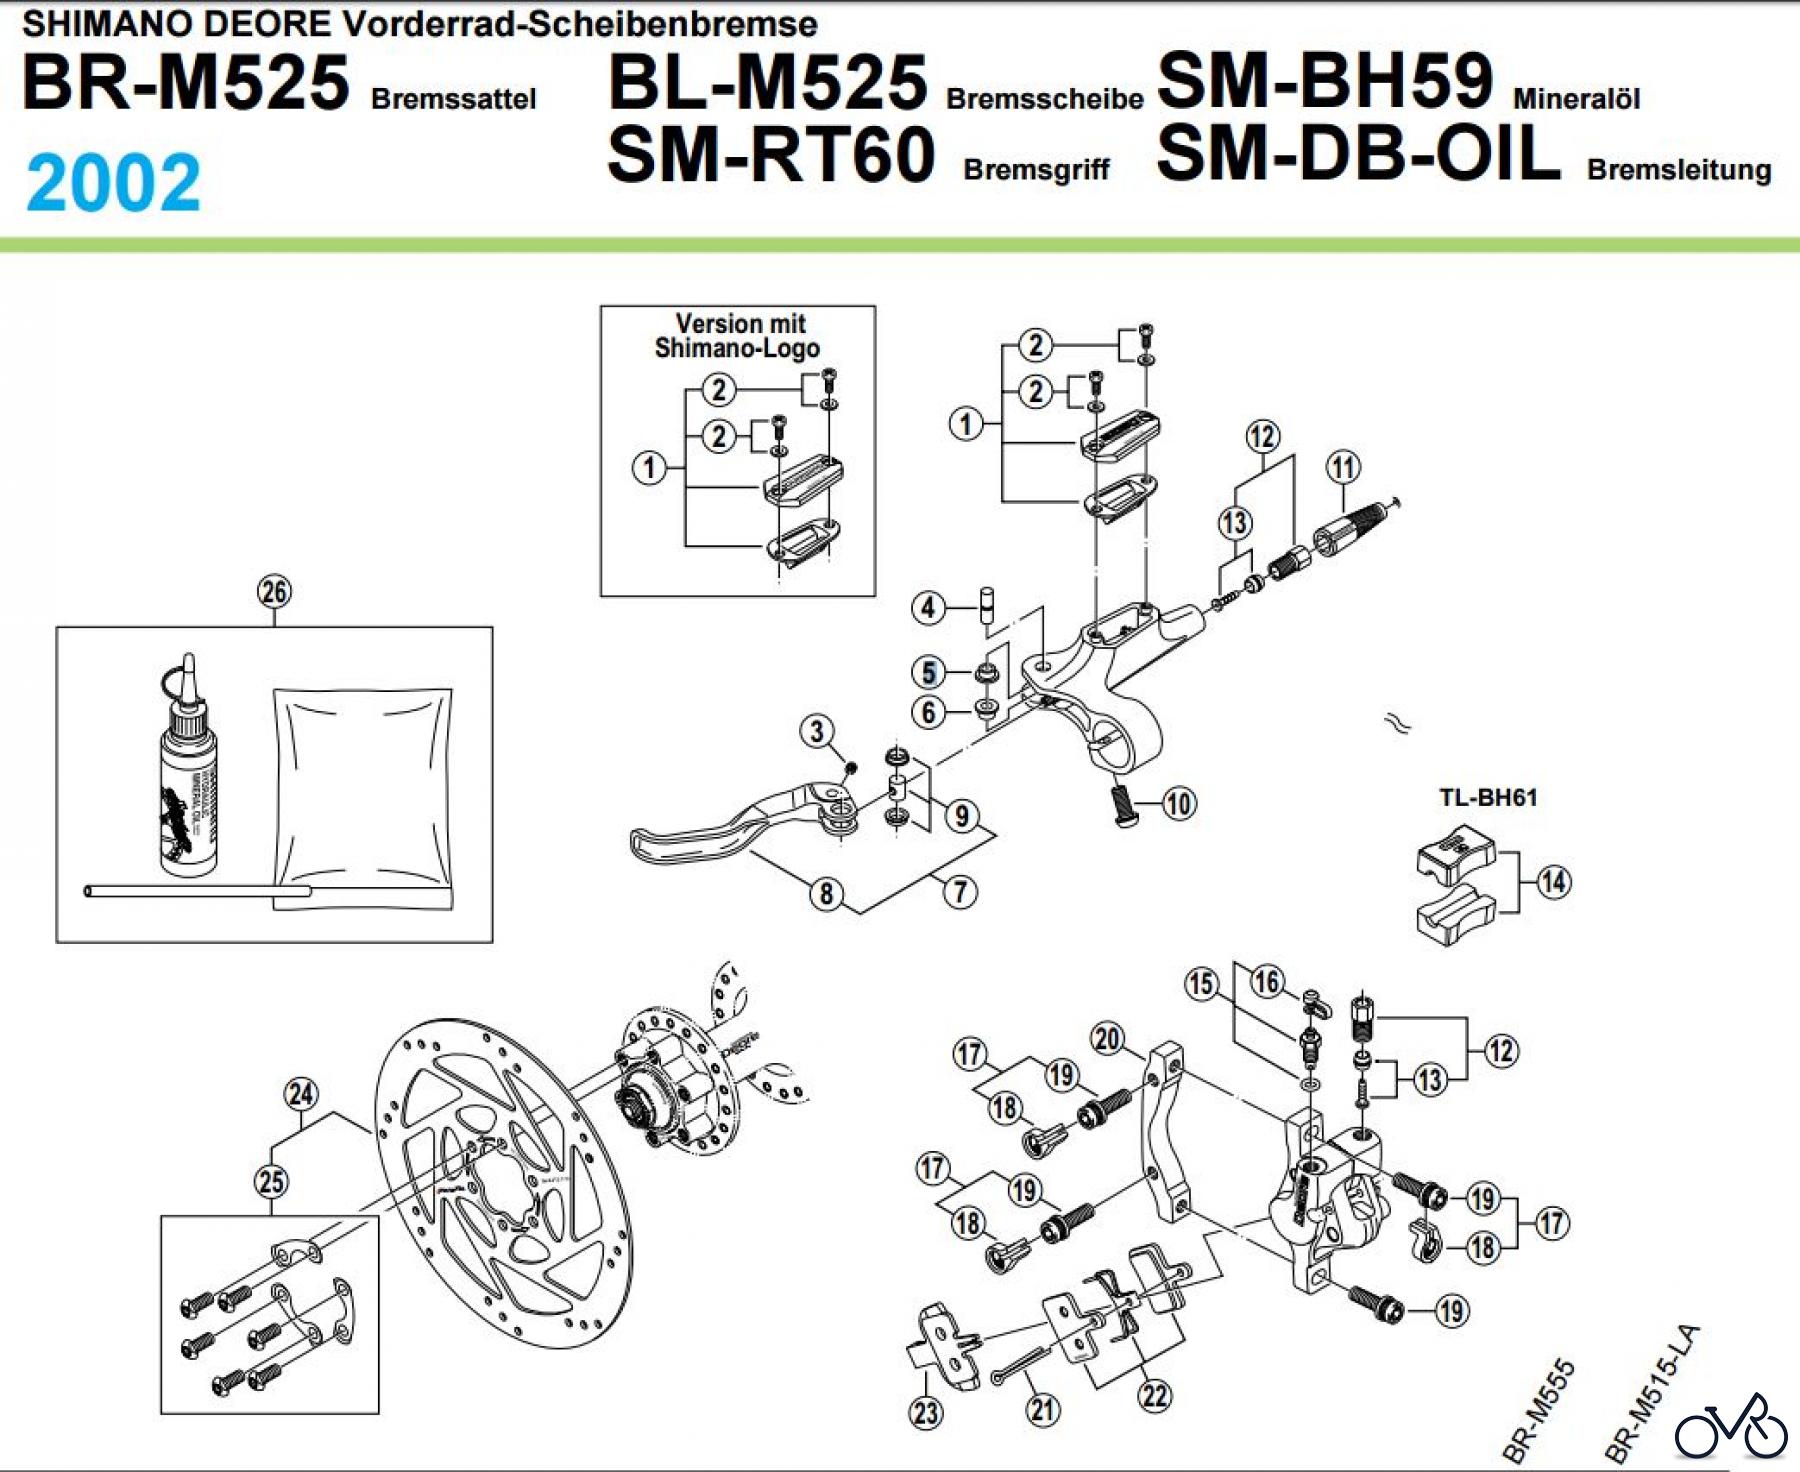  Shimano BR Brake - Bremse BR-M525, BL-M525 von 2002 SHIMANO DEORE Vorderrad-Scheibenbremse